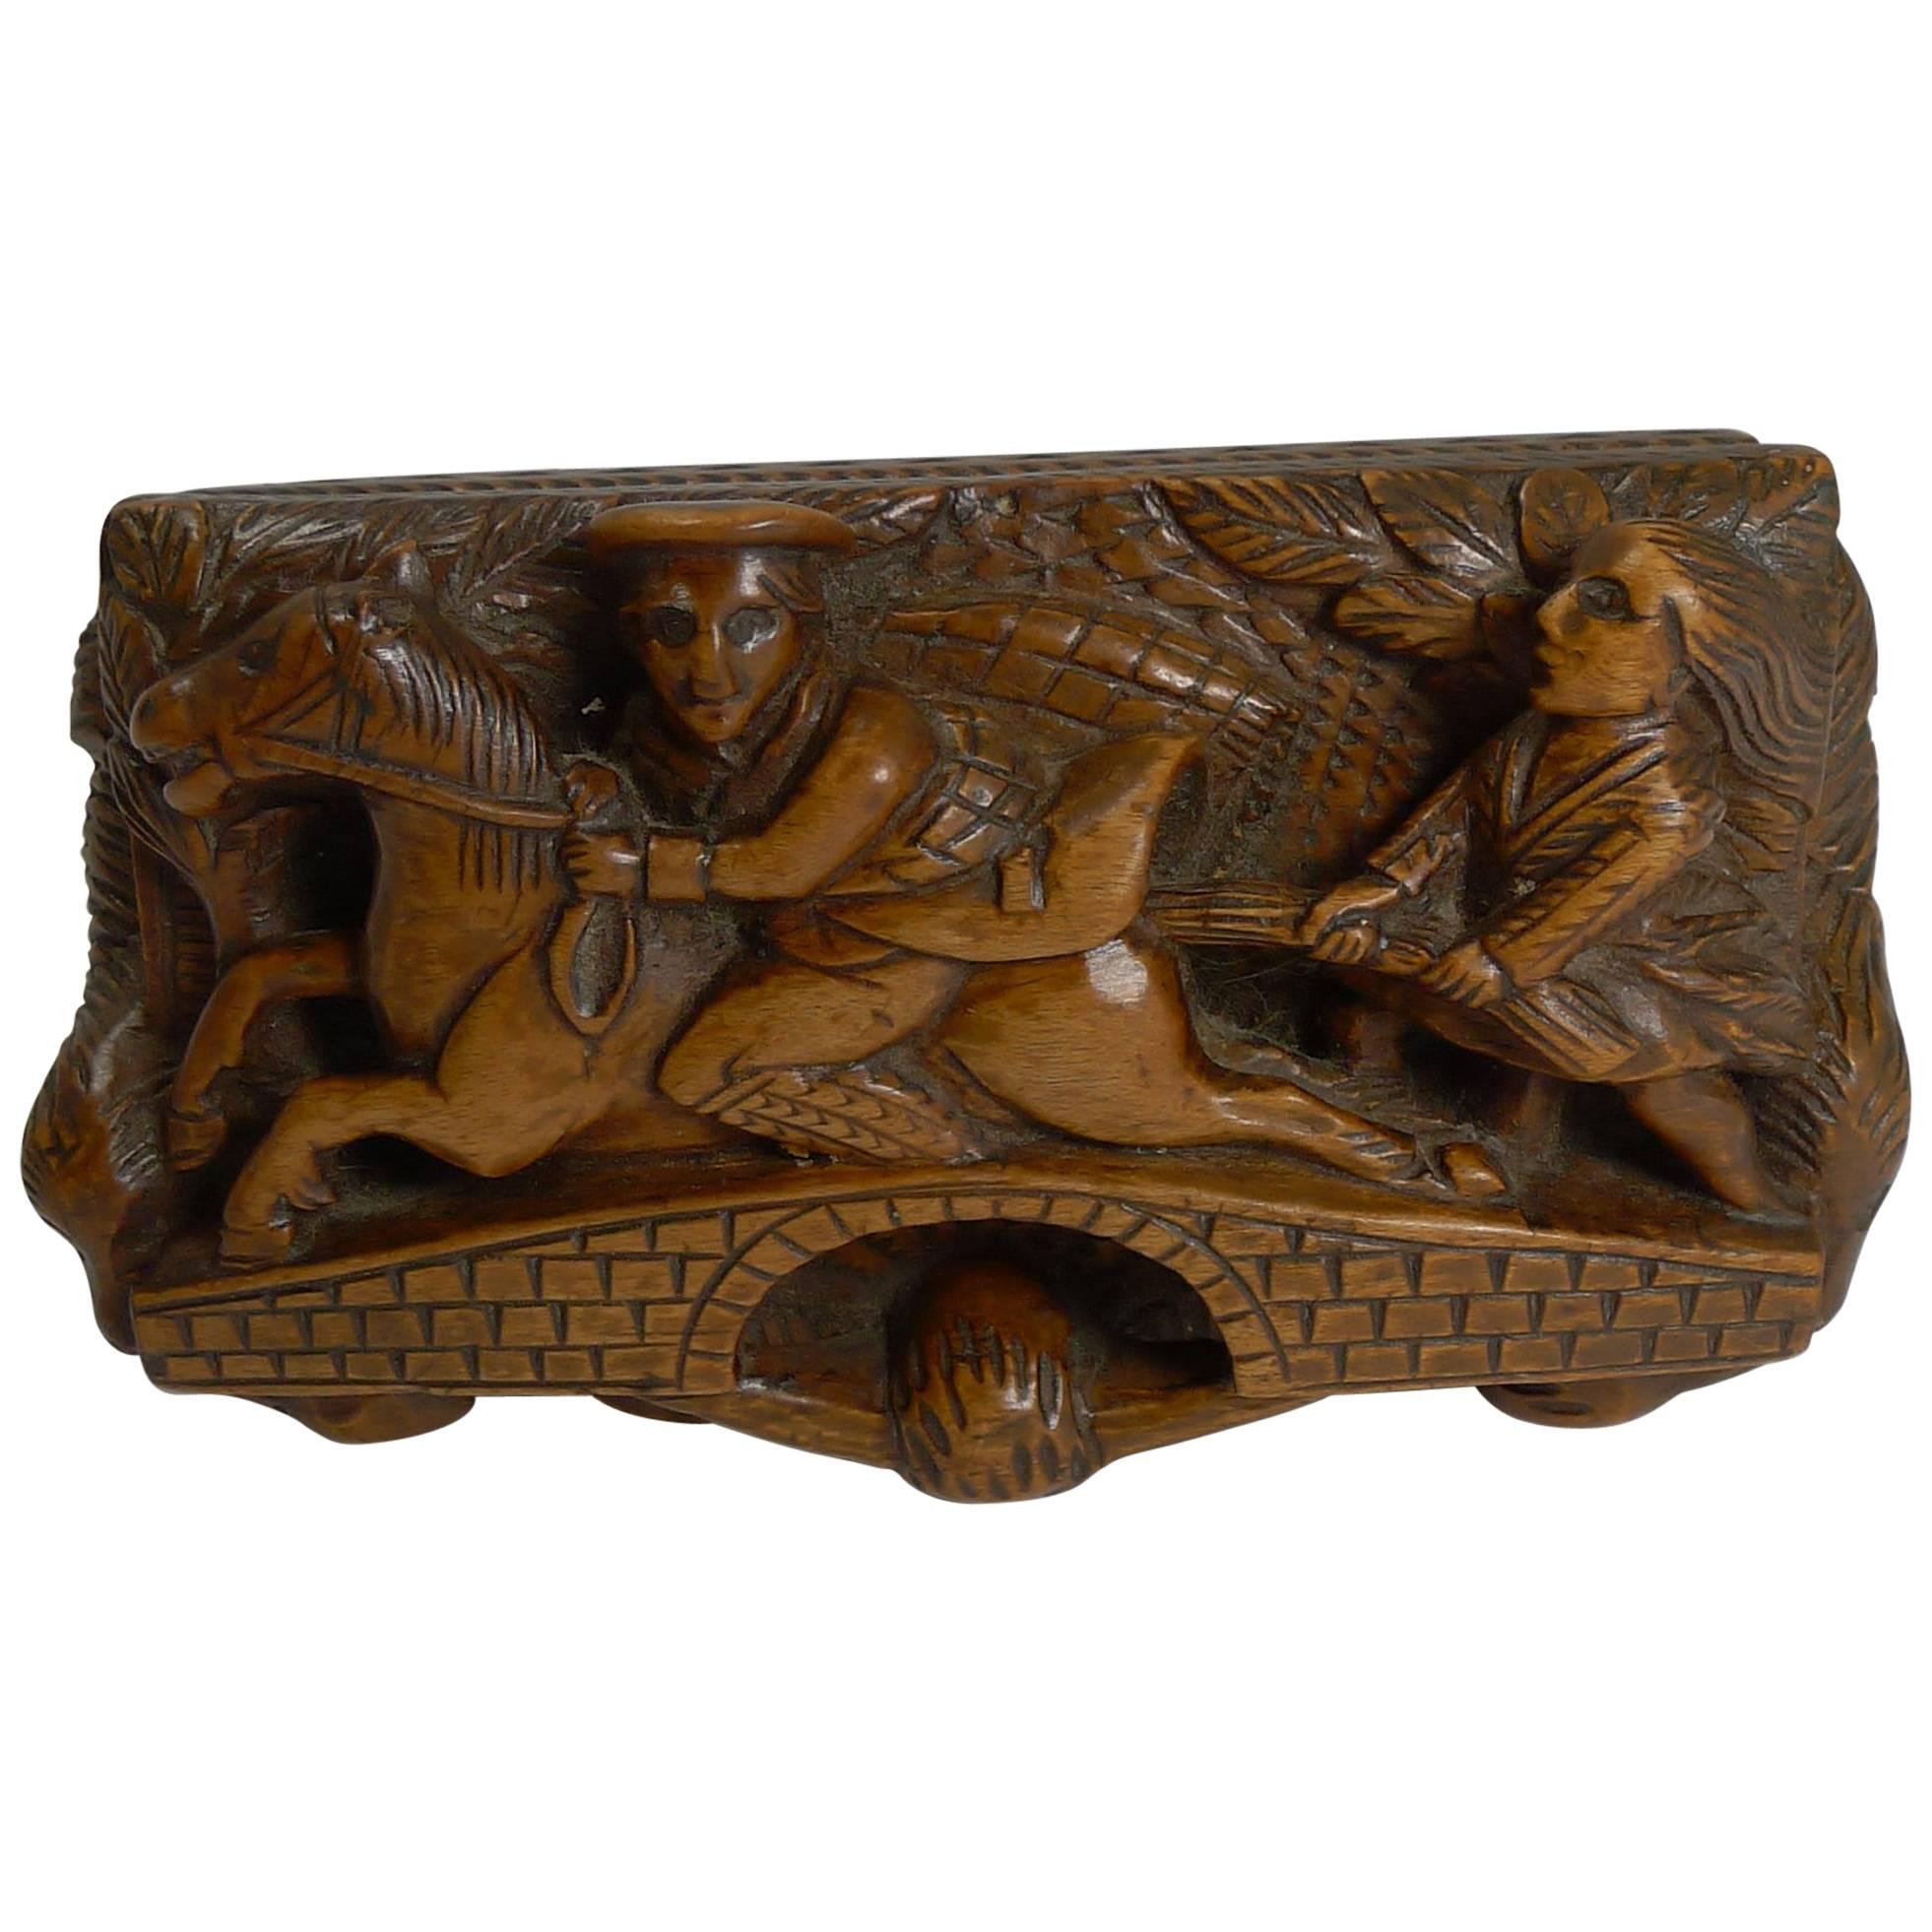 19th Century Scottish Hand-Carved Table Snuff Box, Tam O'shanter